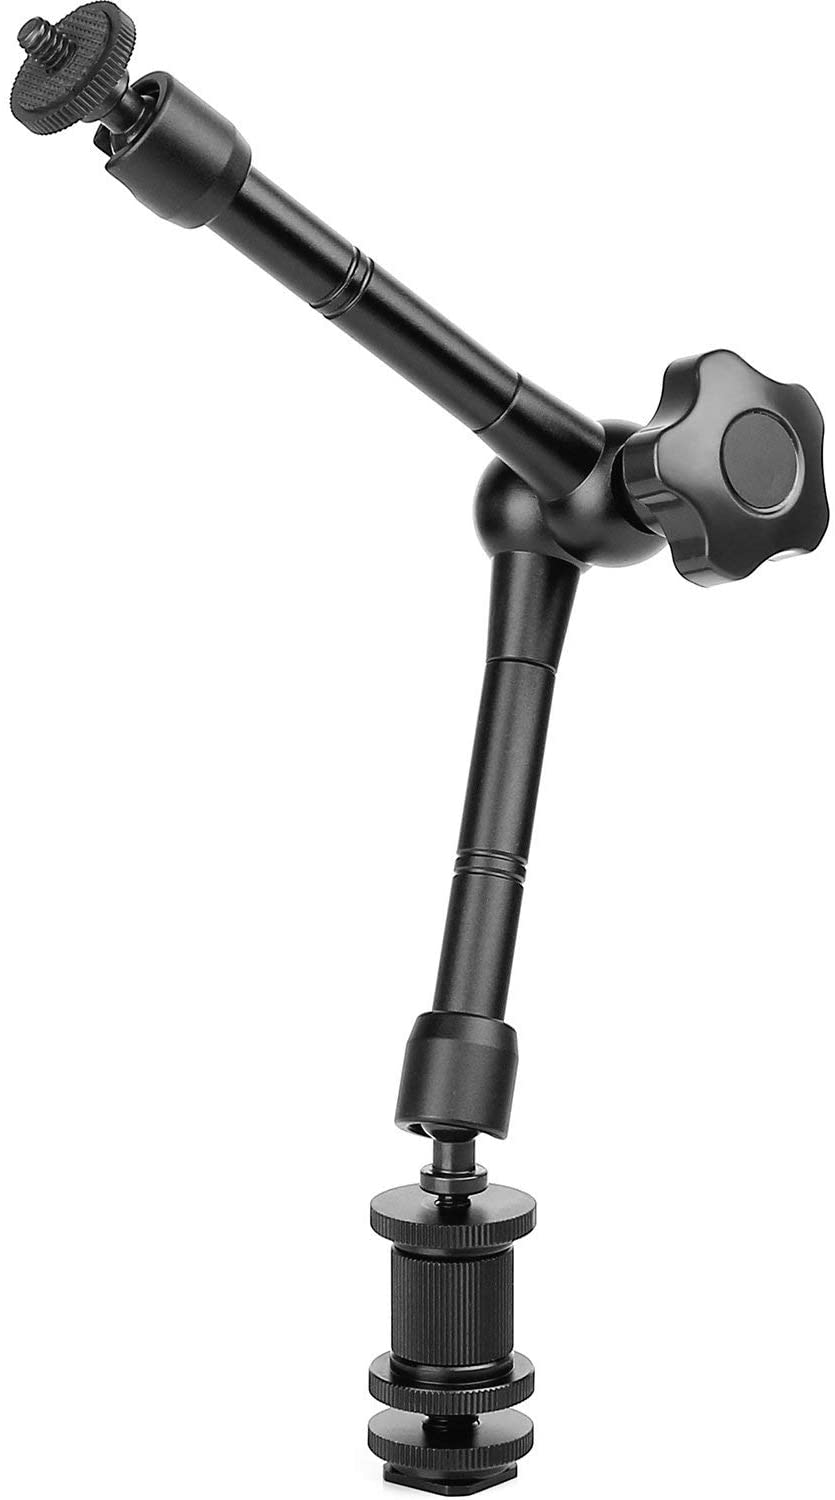 Selens 11-inch Magic Arm with Hotshoe for Cameras Camera tek